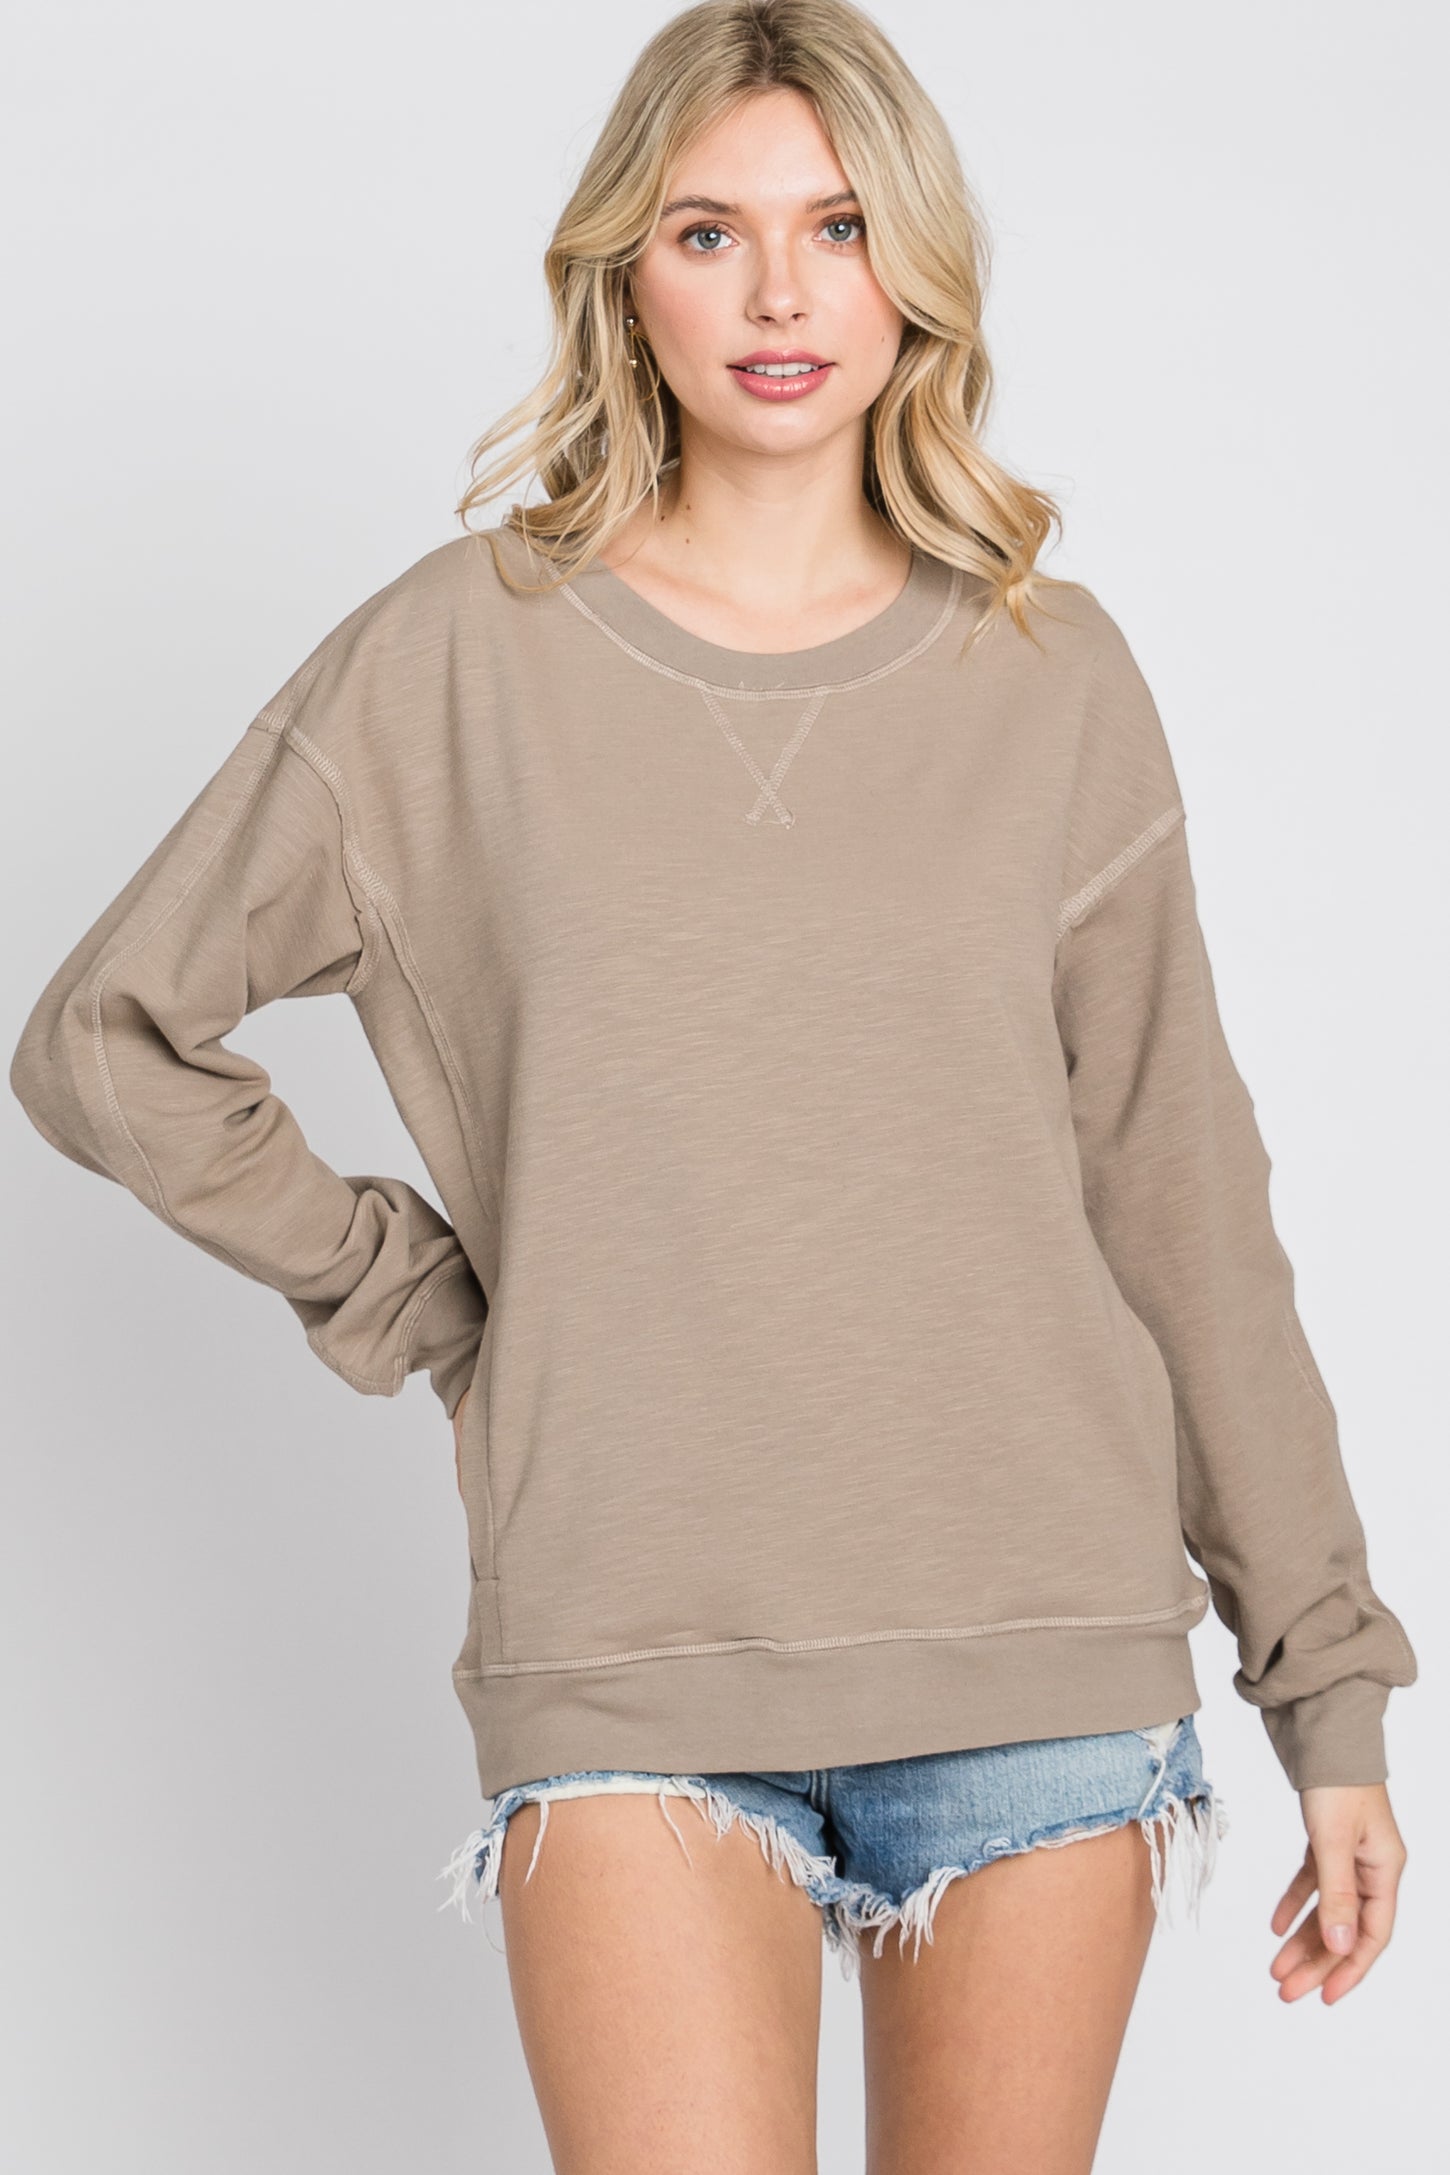 Taupe Long Sleeve Side Pocket Sweatshirt